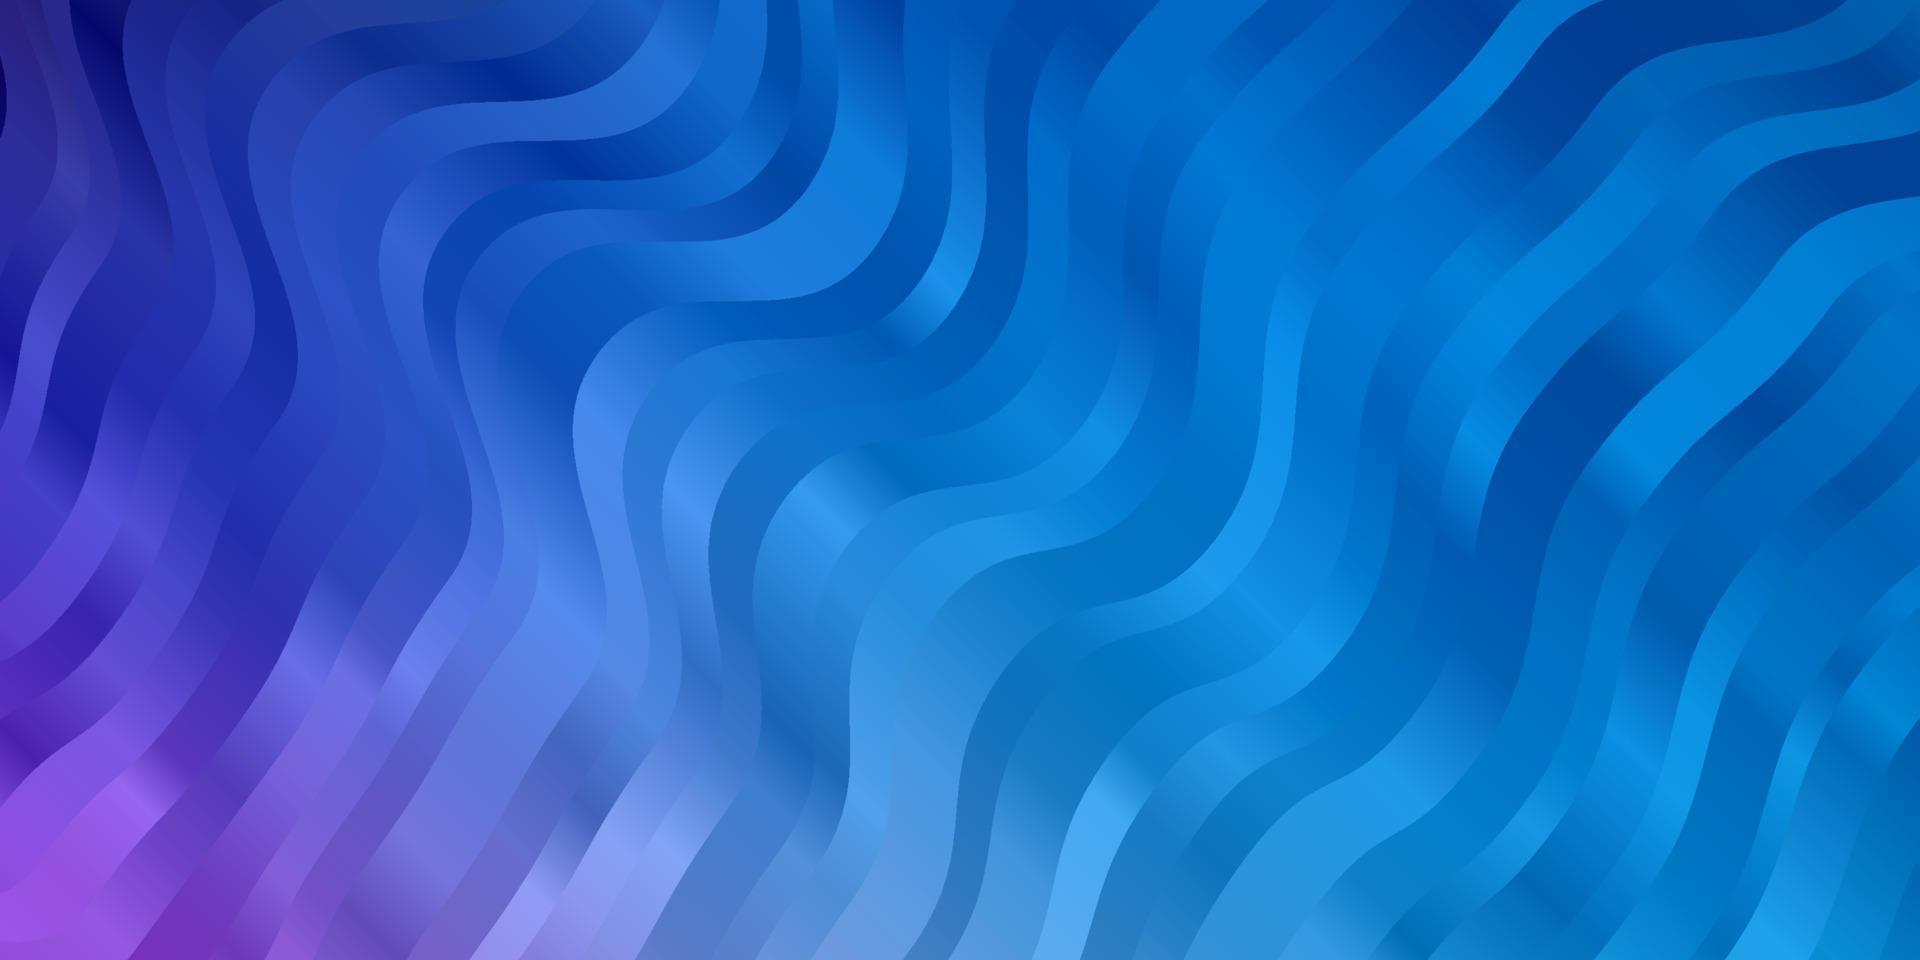 hellrosa, blaues Vektormuster mit gekrümmten Linien. vektor